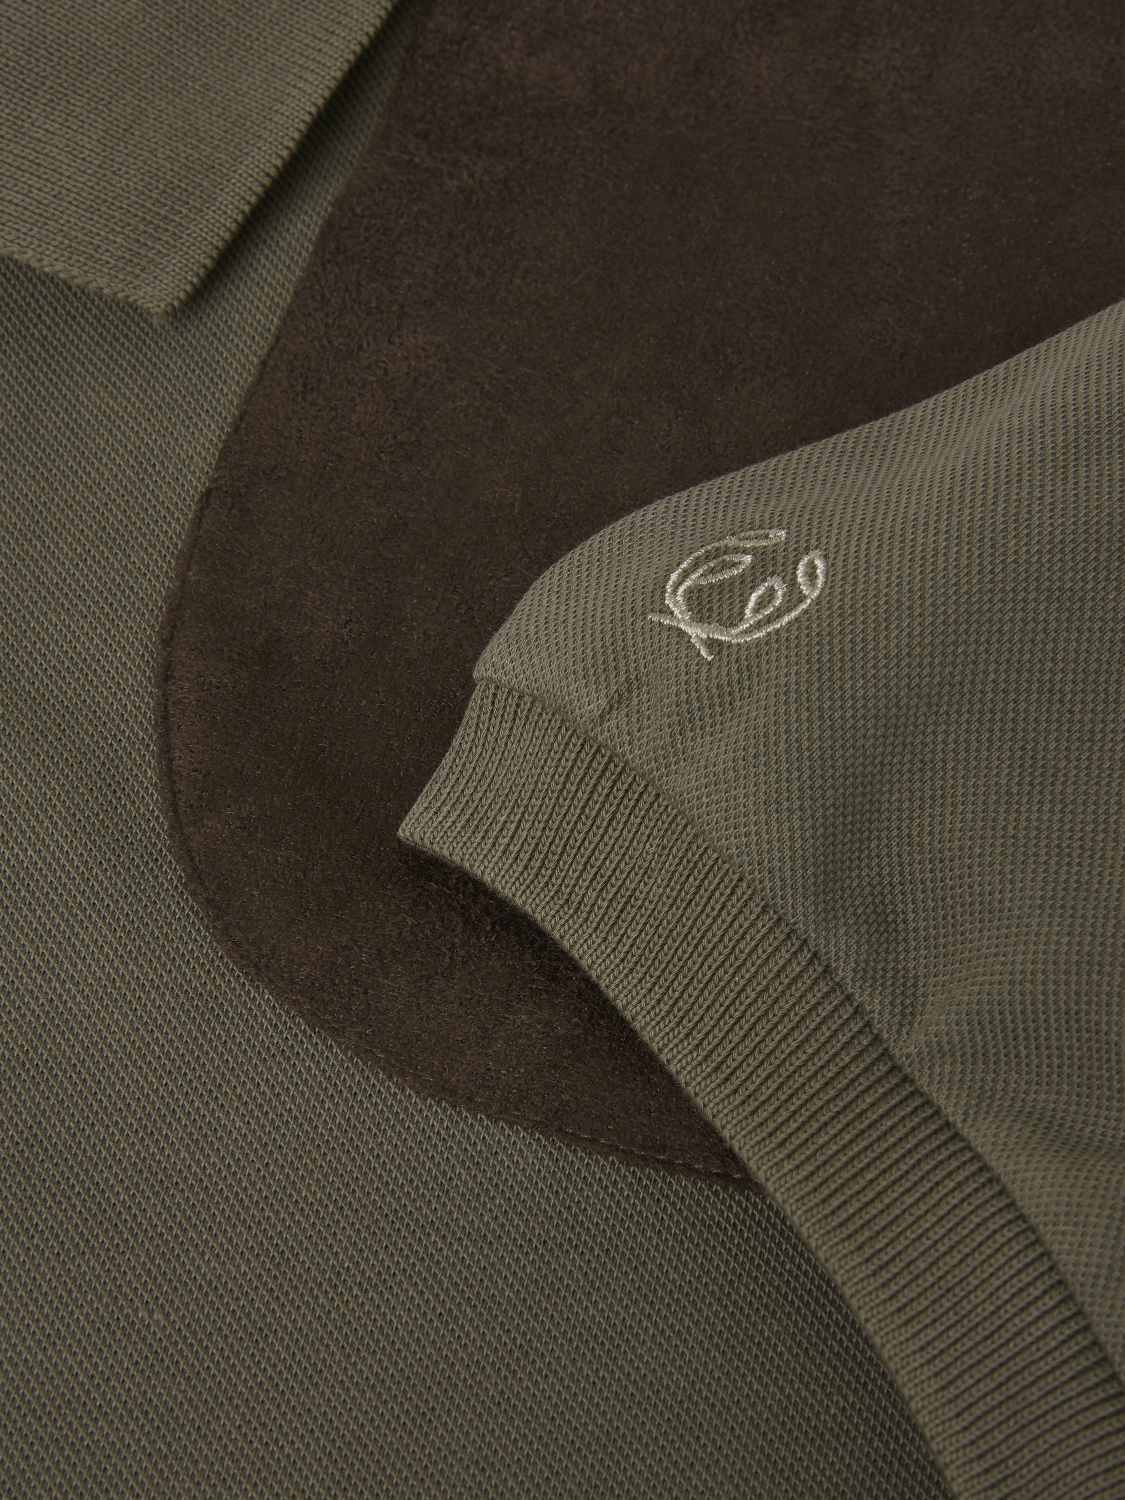 Eyam Poloshirt aus 100 Prozent Baumwolle mit Besätzen aus Alcantara an den Schultern